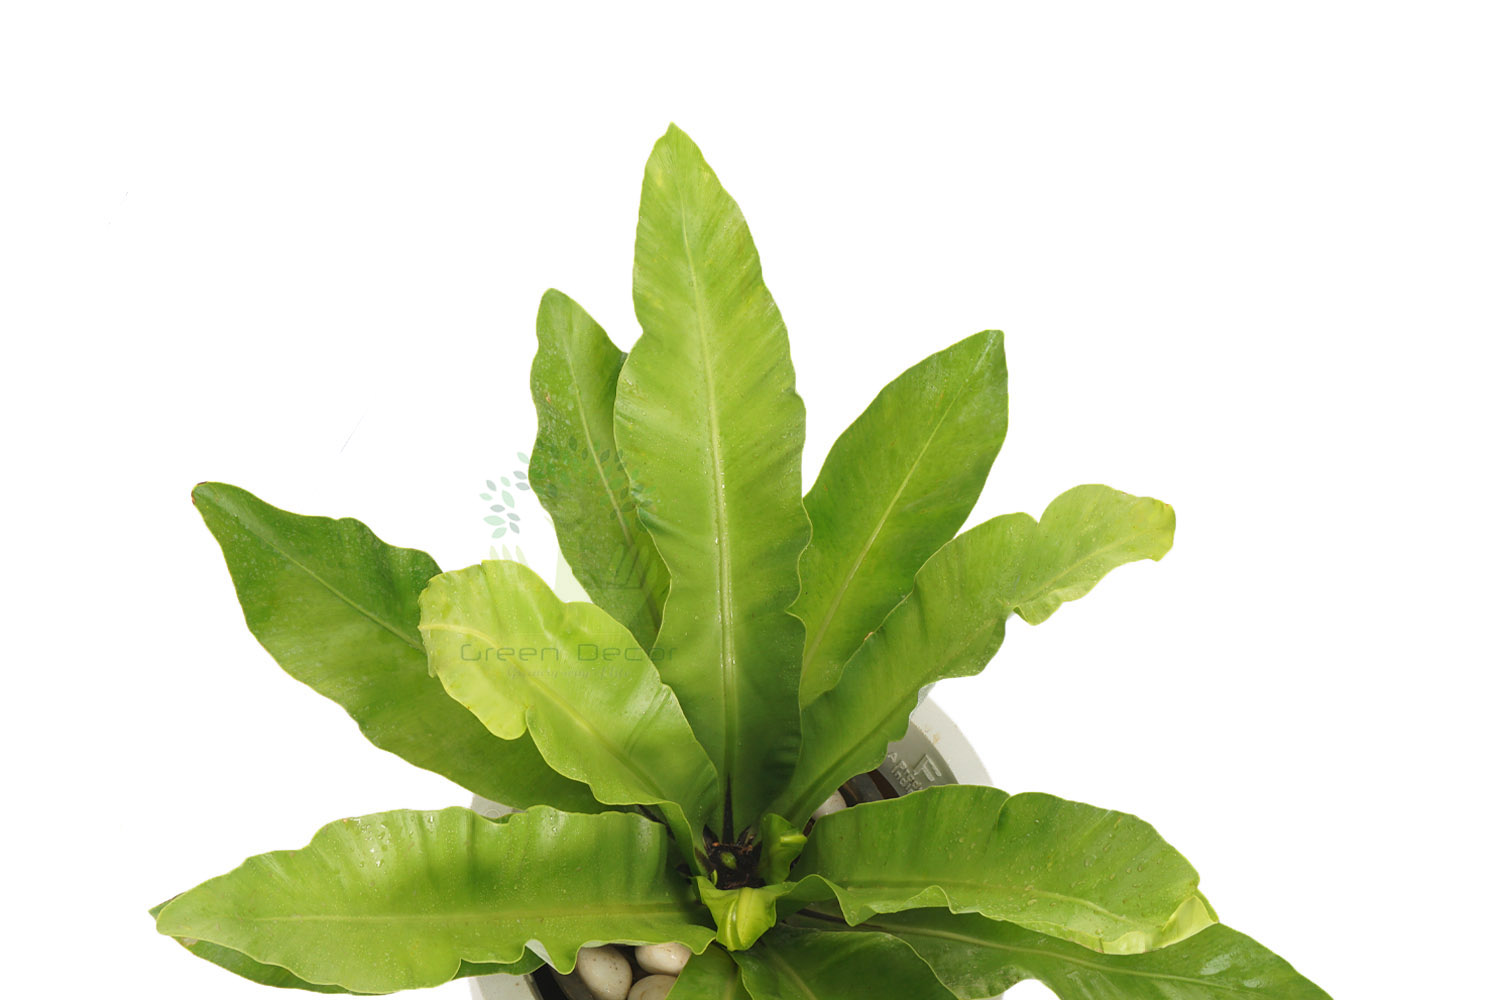 Buy Asplenium Nidus Plants , White Pots and seeds in Delhi NCR by the best online nursery shop Greendecor.